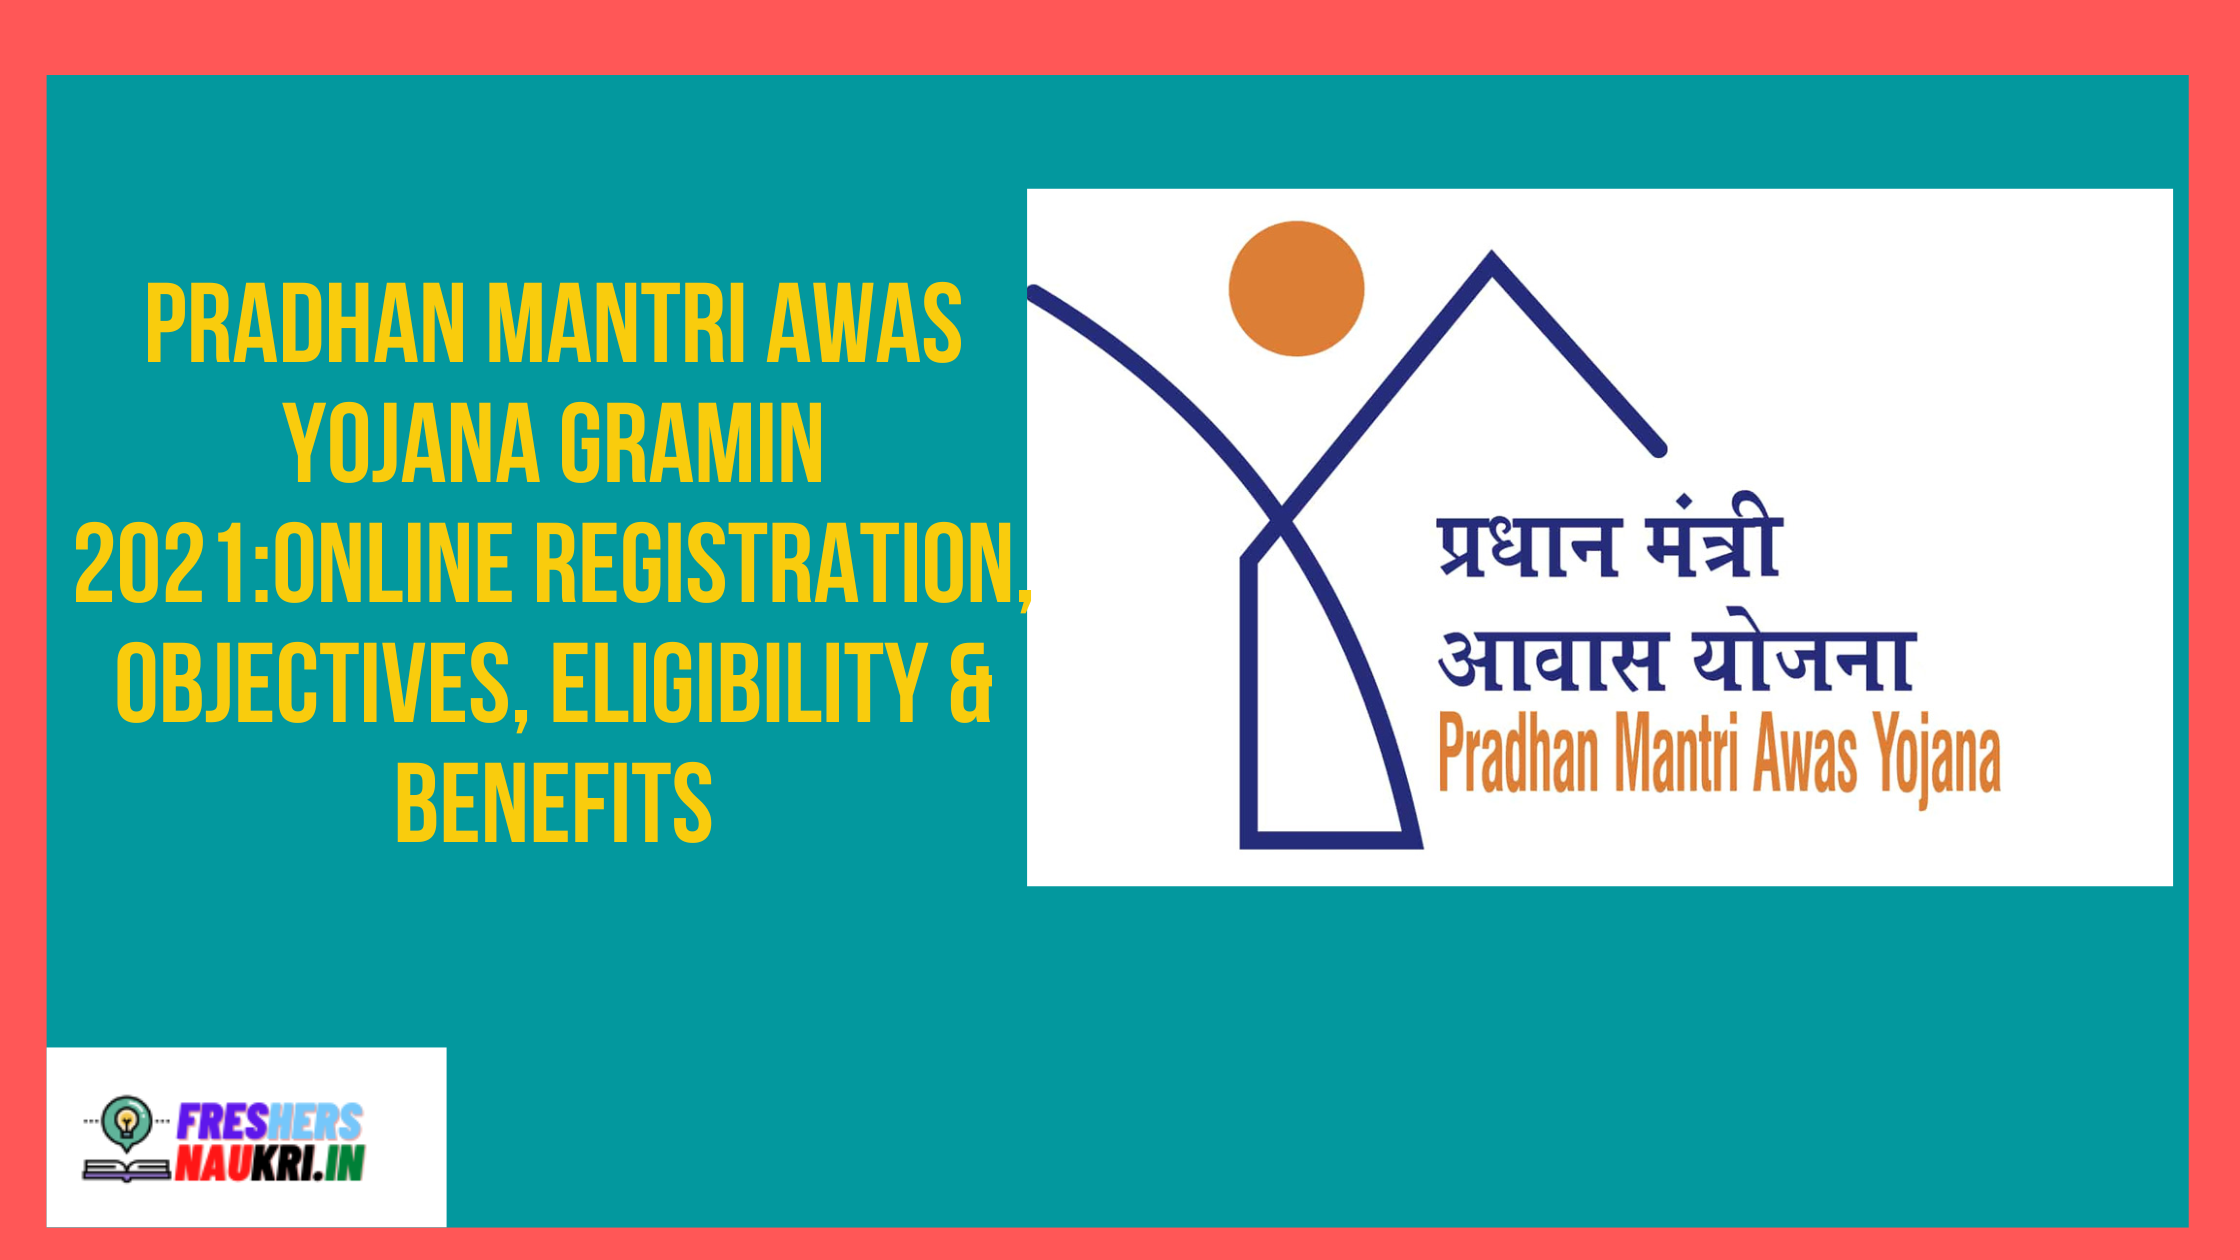 Pradhan Mantri Awas Yojana Gramin 2021:Online Registration, Objectives, Eligibility & Benefits